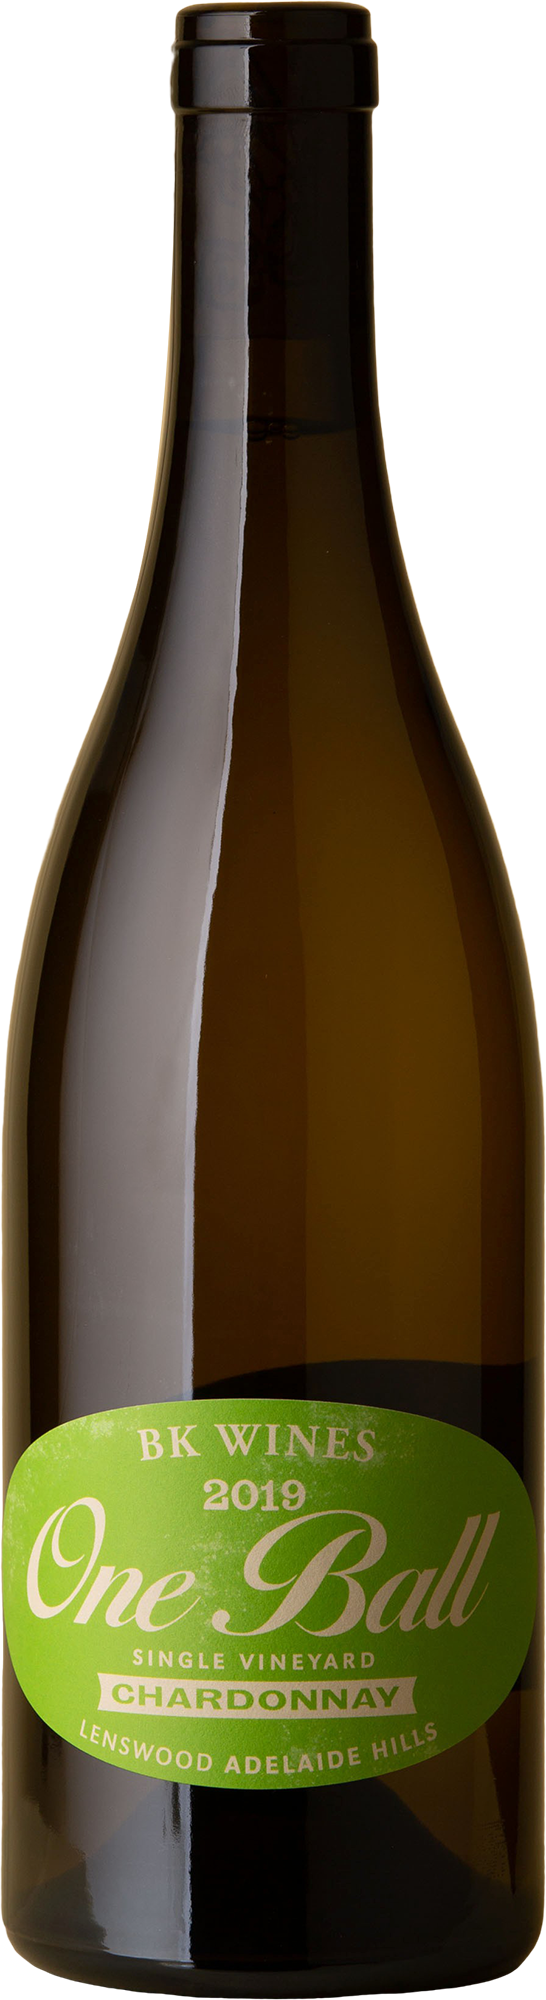 BK Wines - One Ball Chardonnay 2019 White Wine